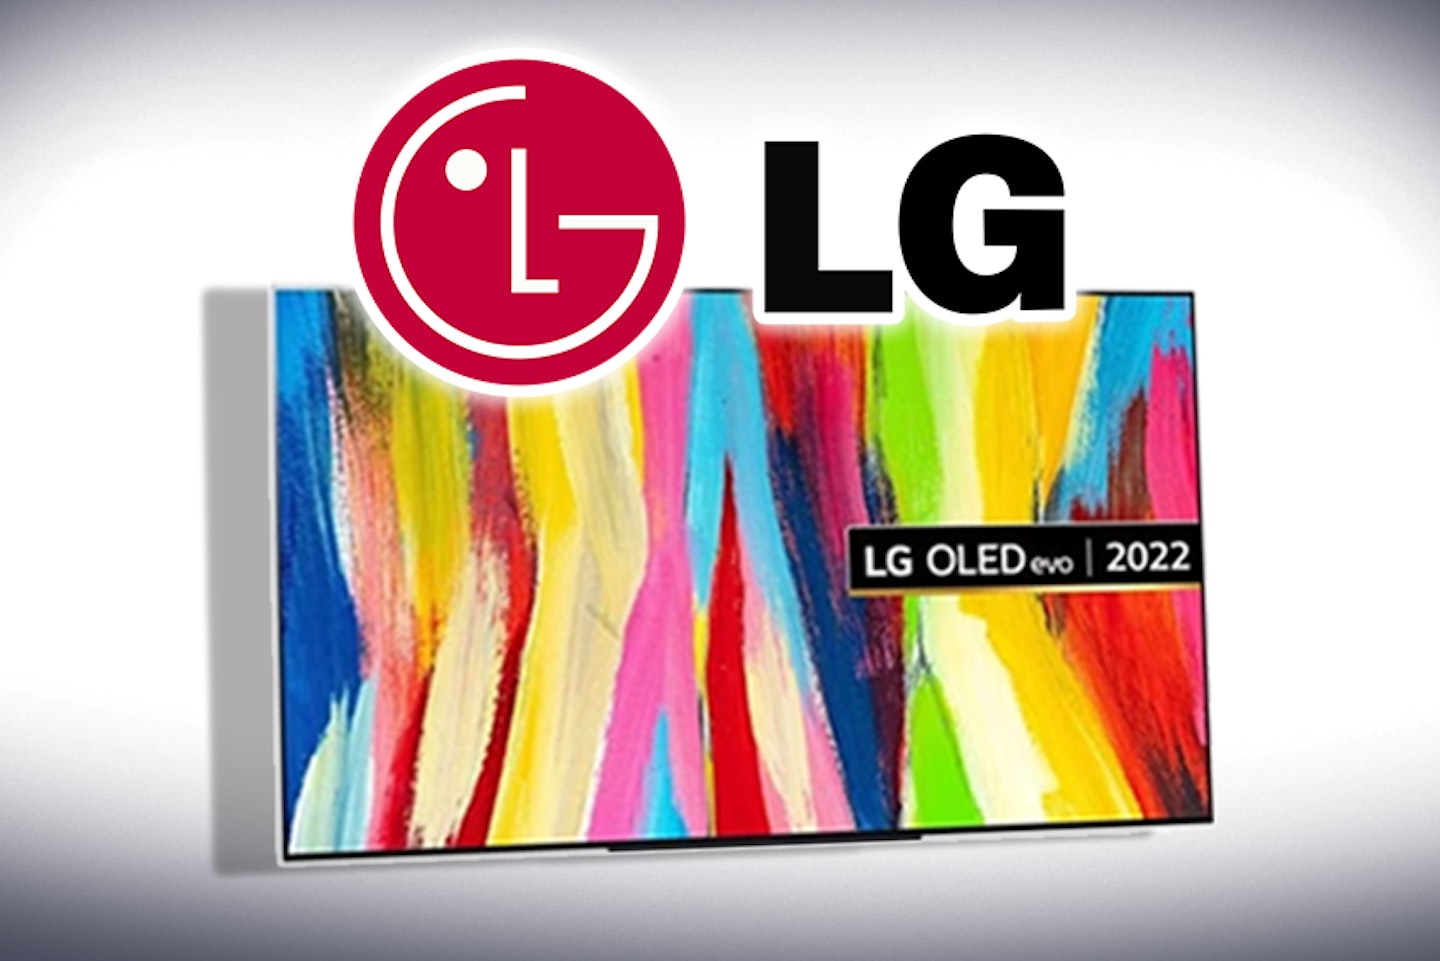 LG TV brand